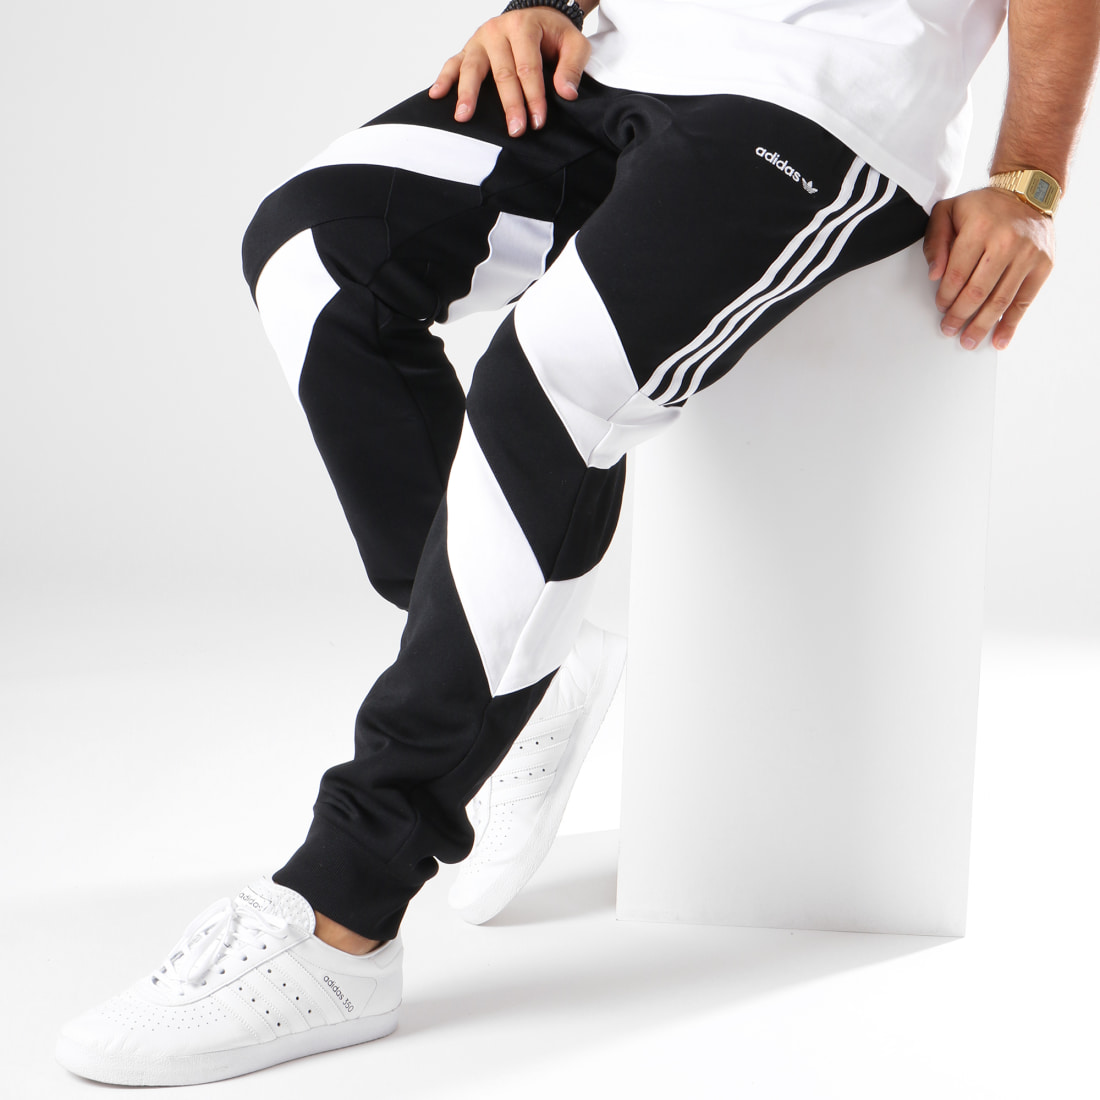 خلفيات للتصوير protein tahmin sandalye adidas originals homme pantalons shorts ... خلفيات للتصوير